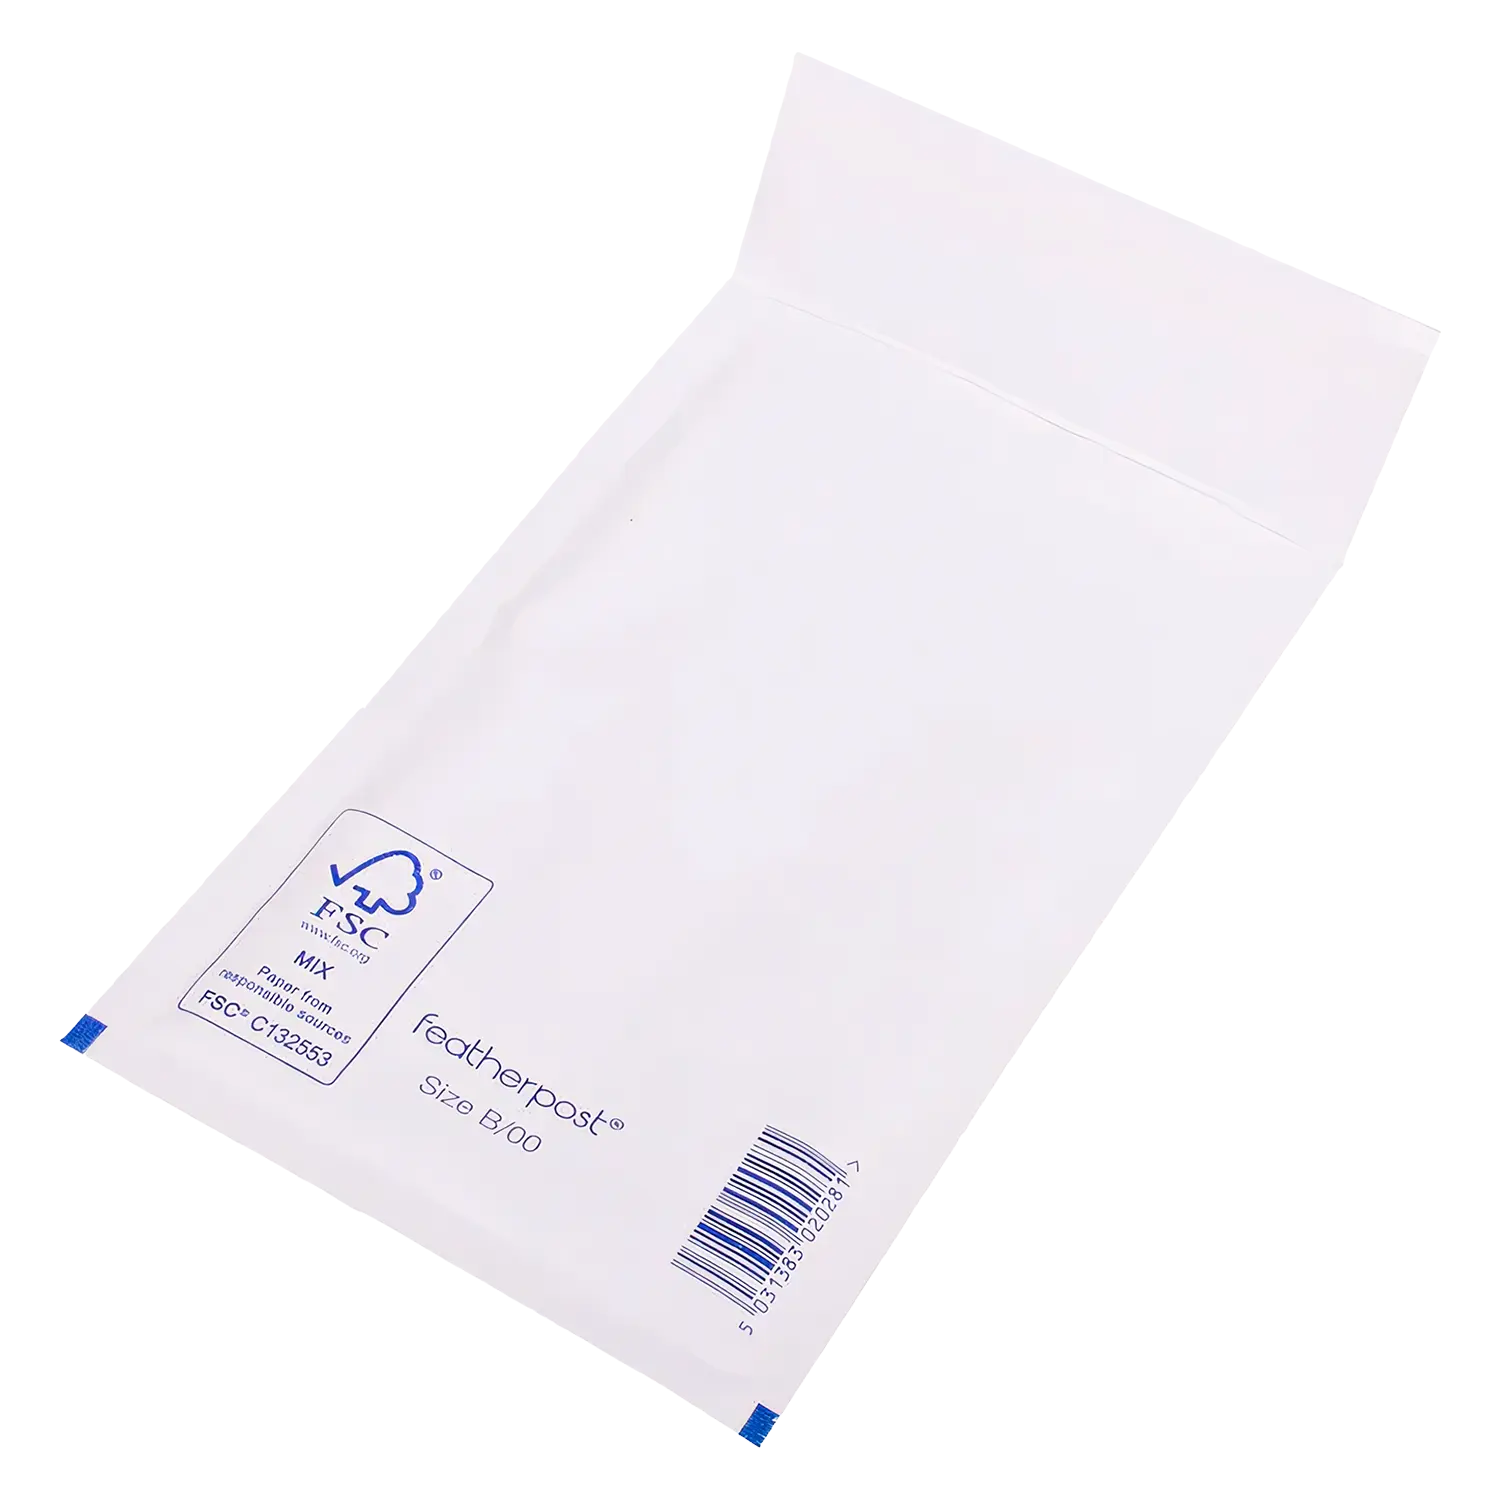 White Padded Bubble Envelopes - 220x265mm